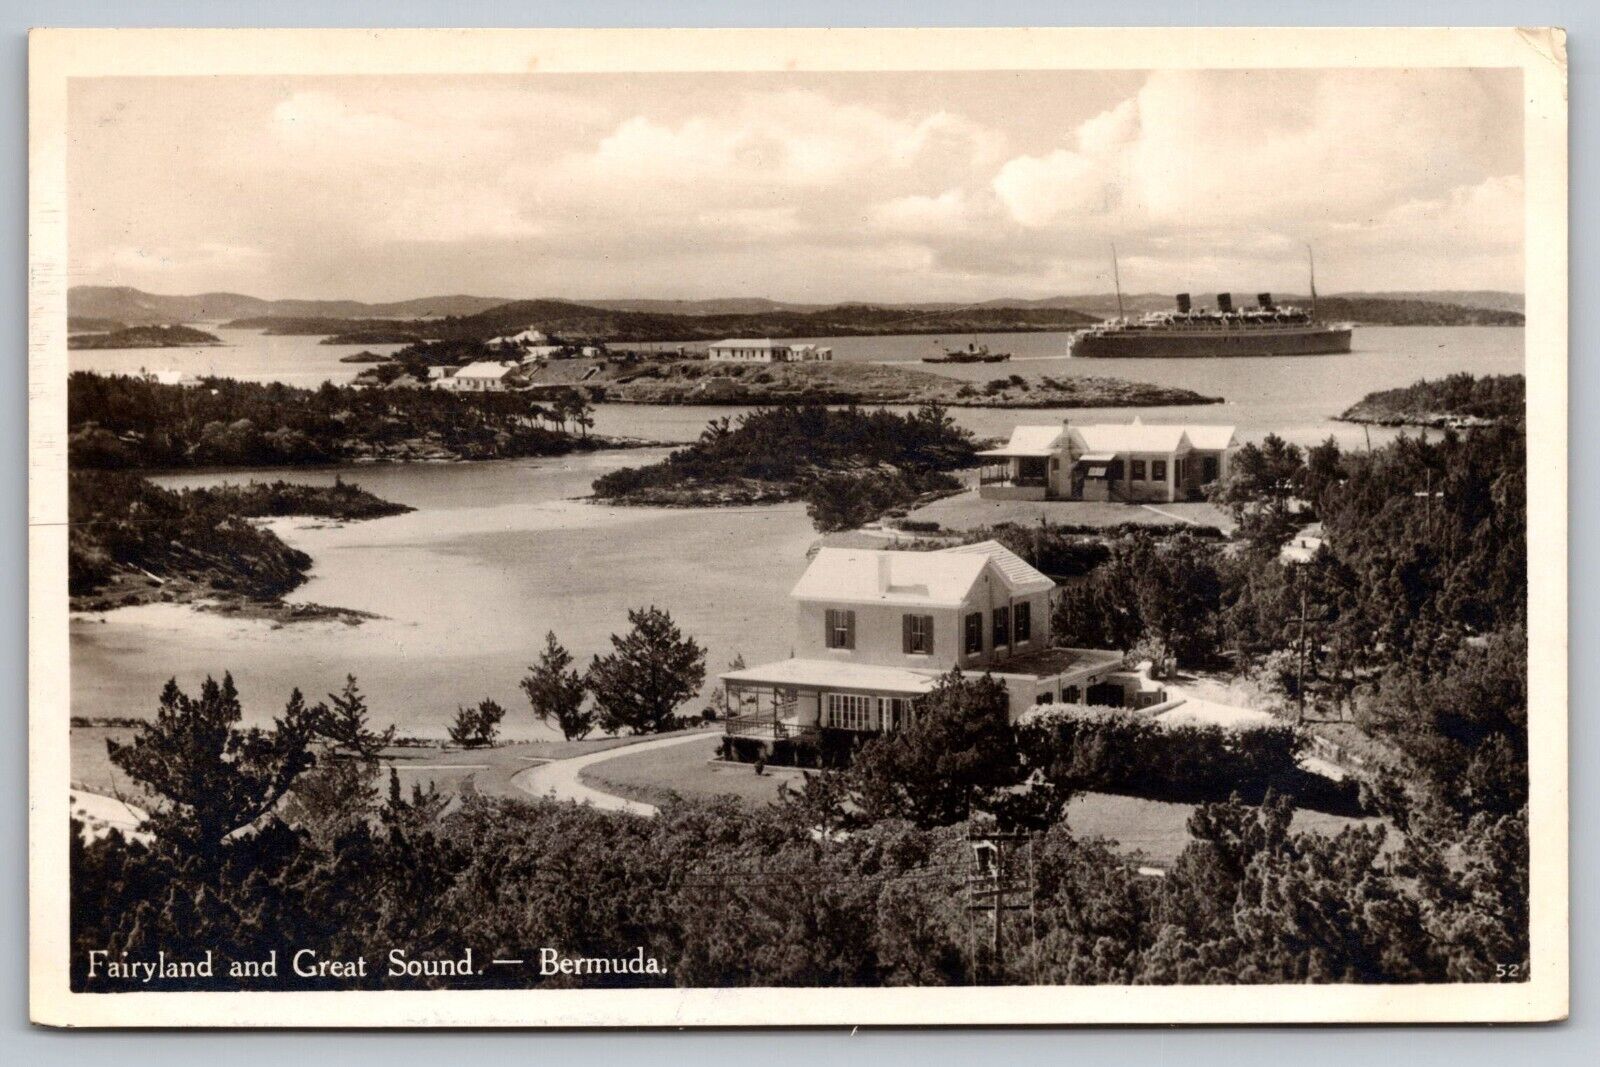 1936 Fairyland and Great Sound. Bermuda Vintage Postcard